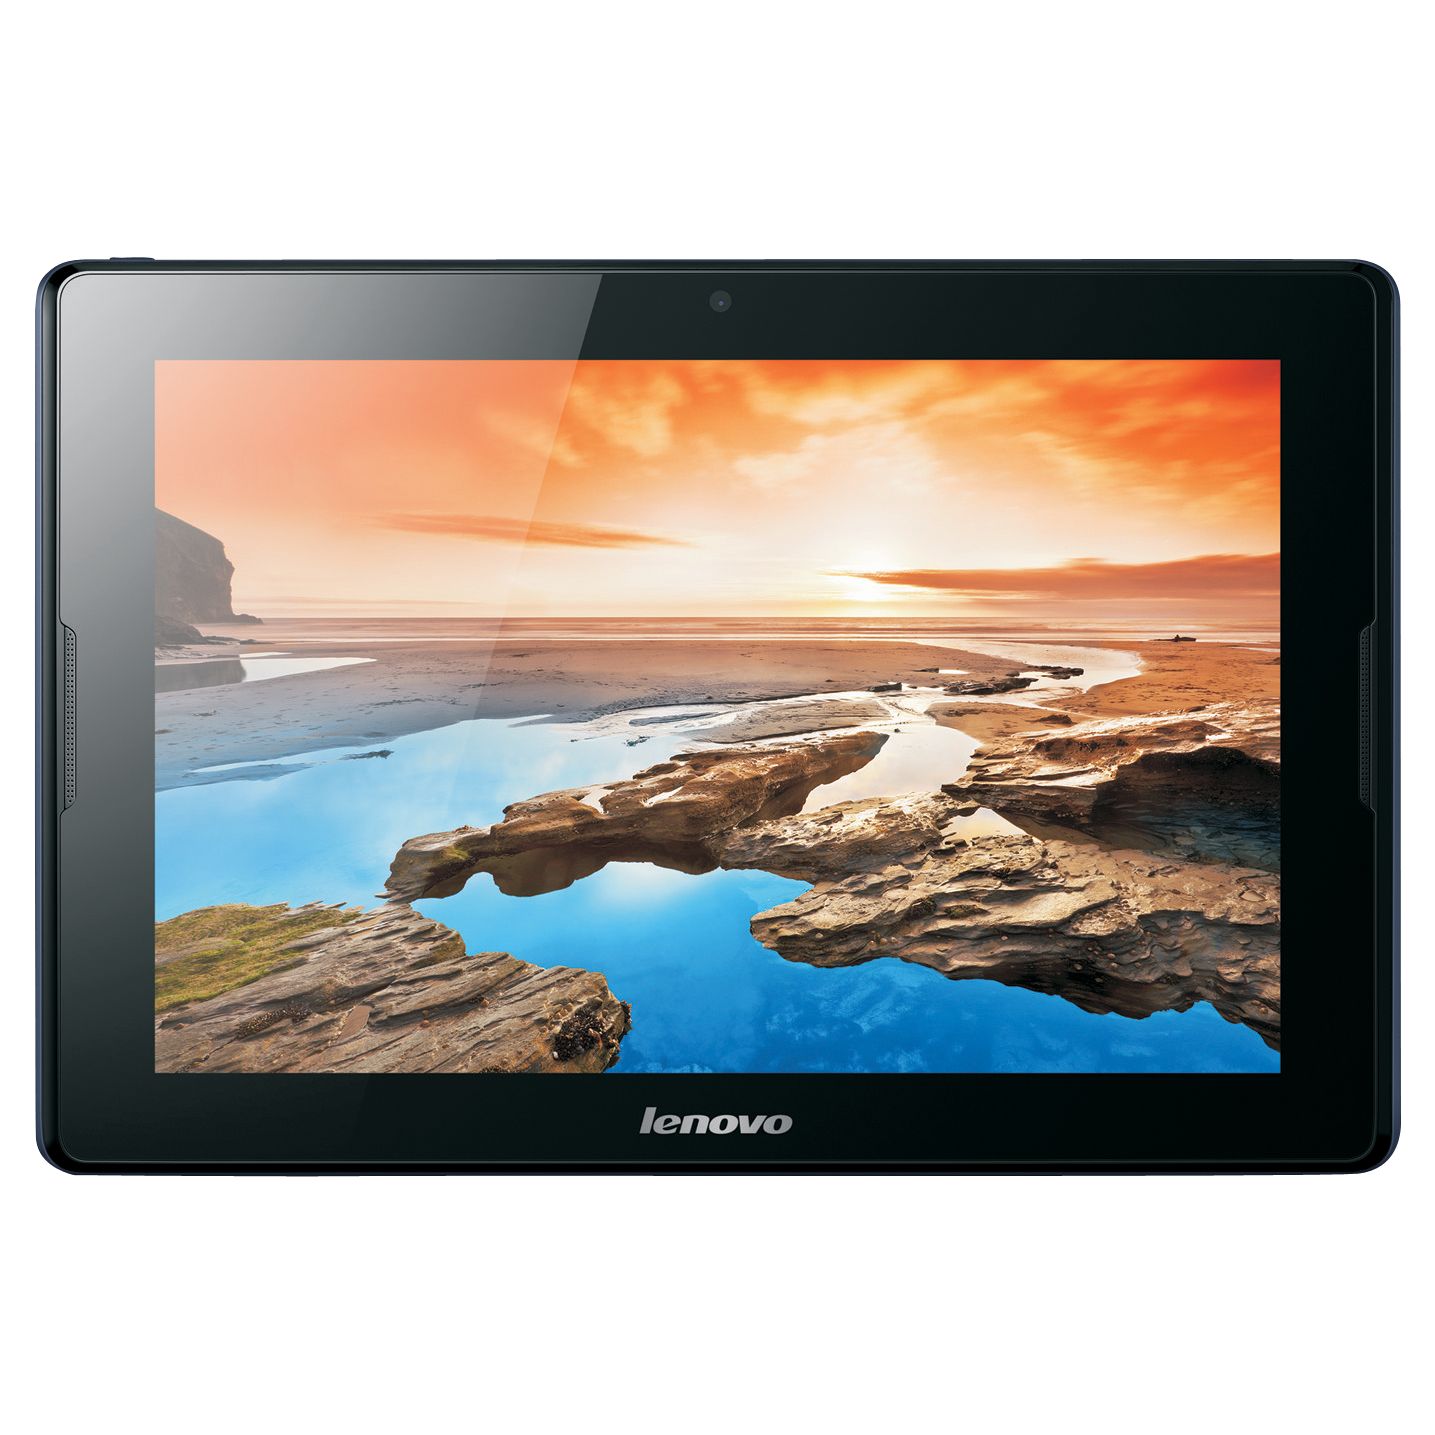 Lenovo A10-70 Tablet, Quad-core Processor, Android, 101", Wi-Fi, 16GB, Midnight Blue